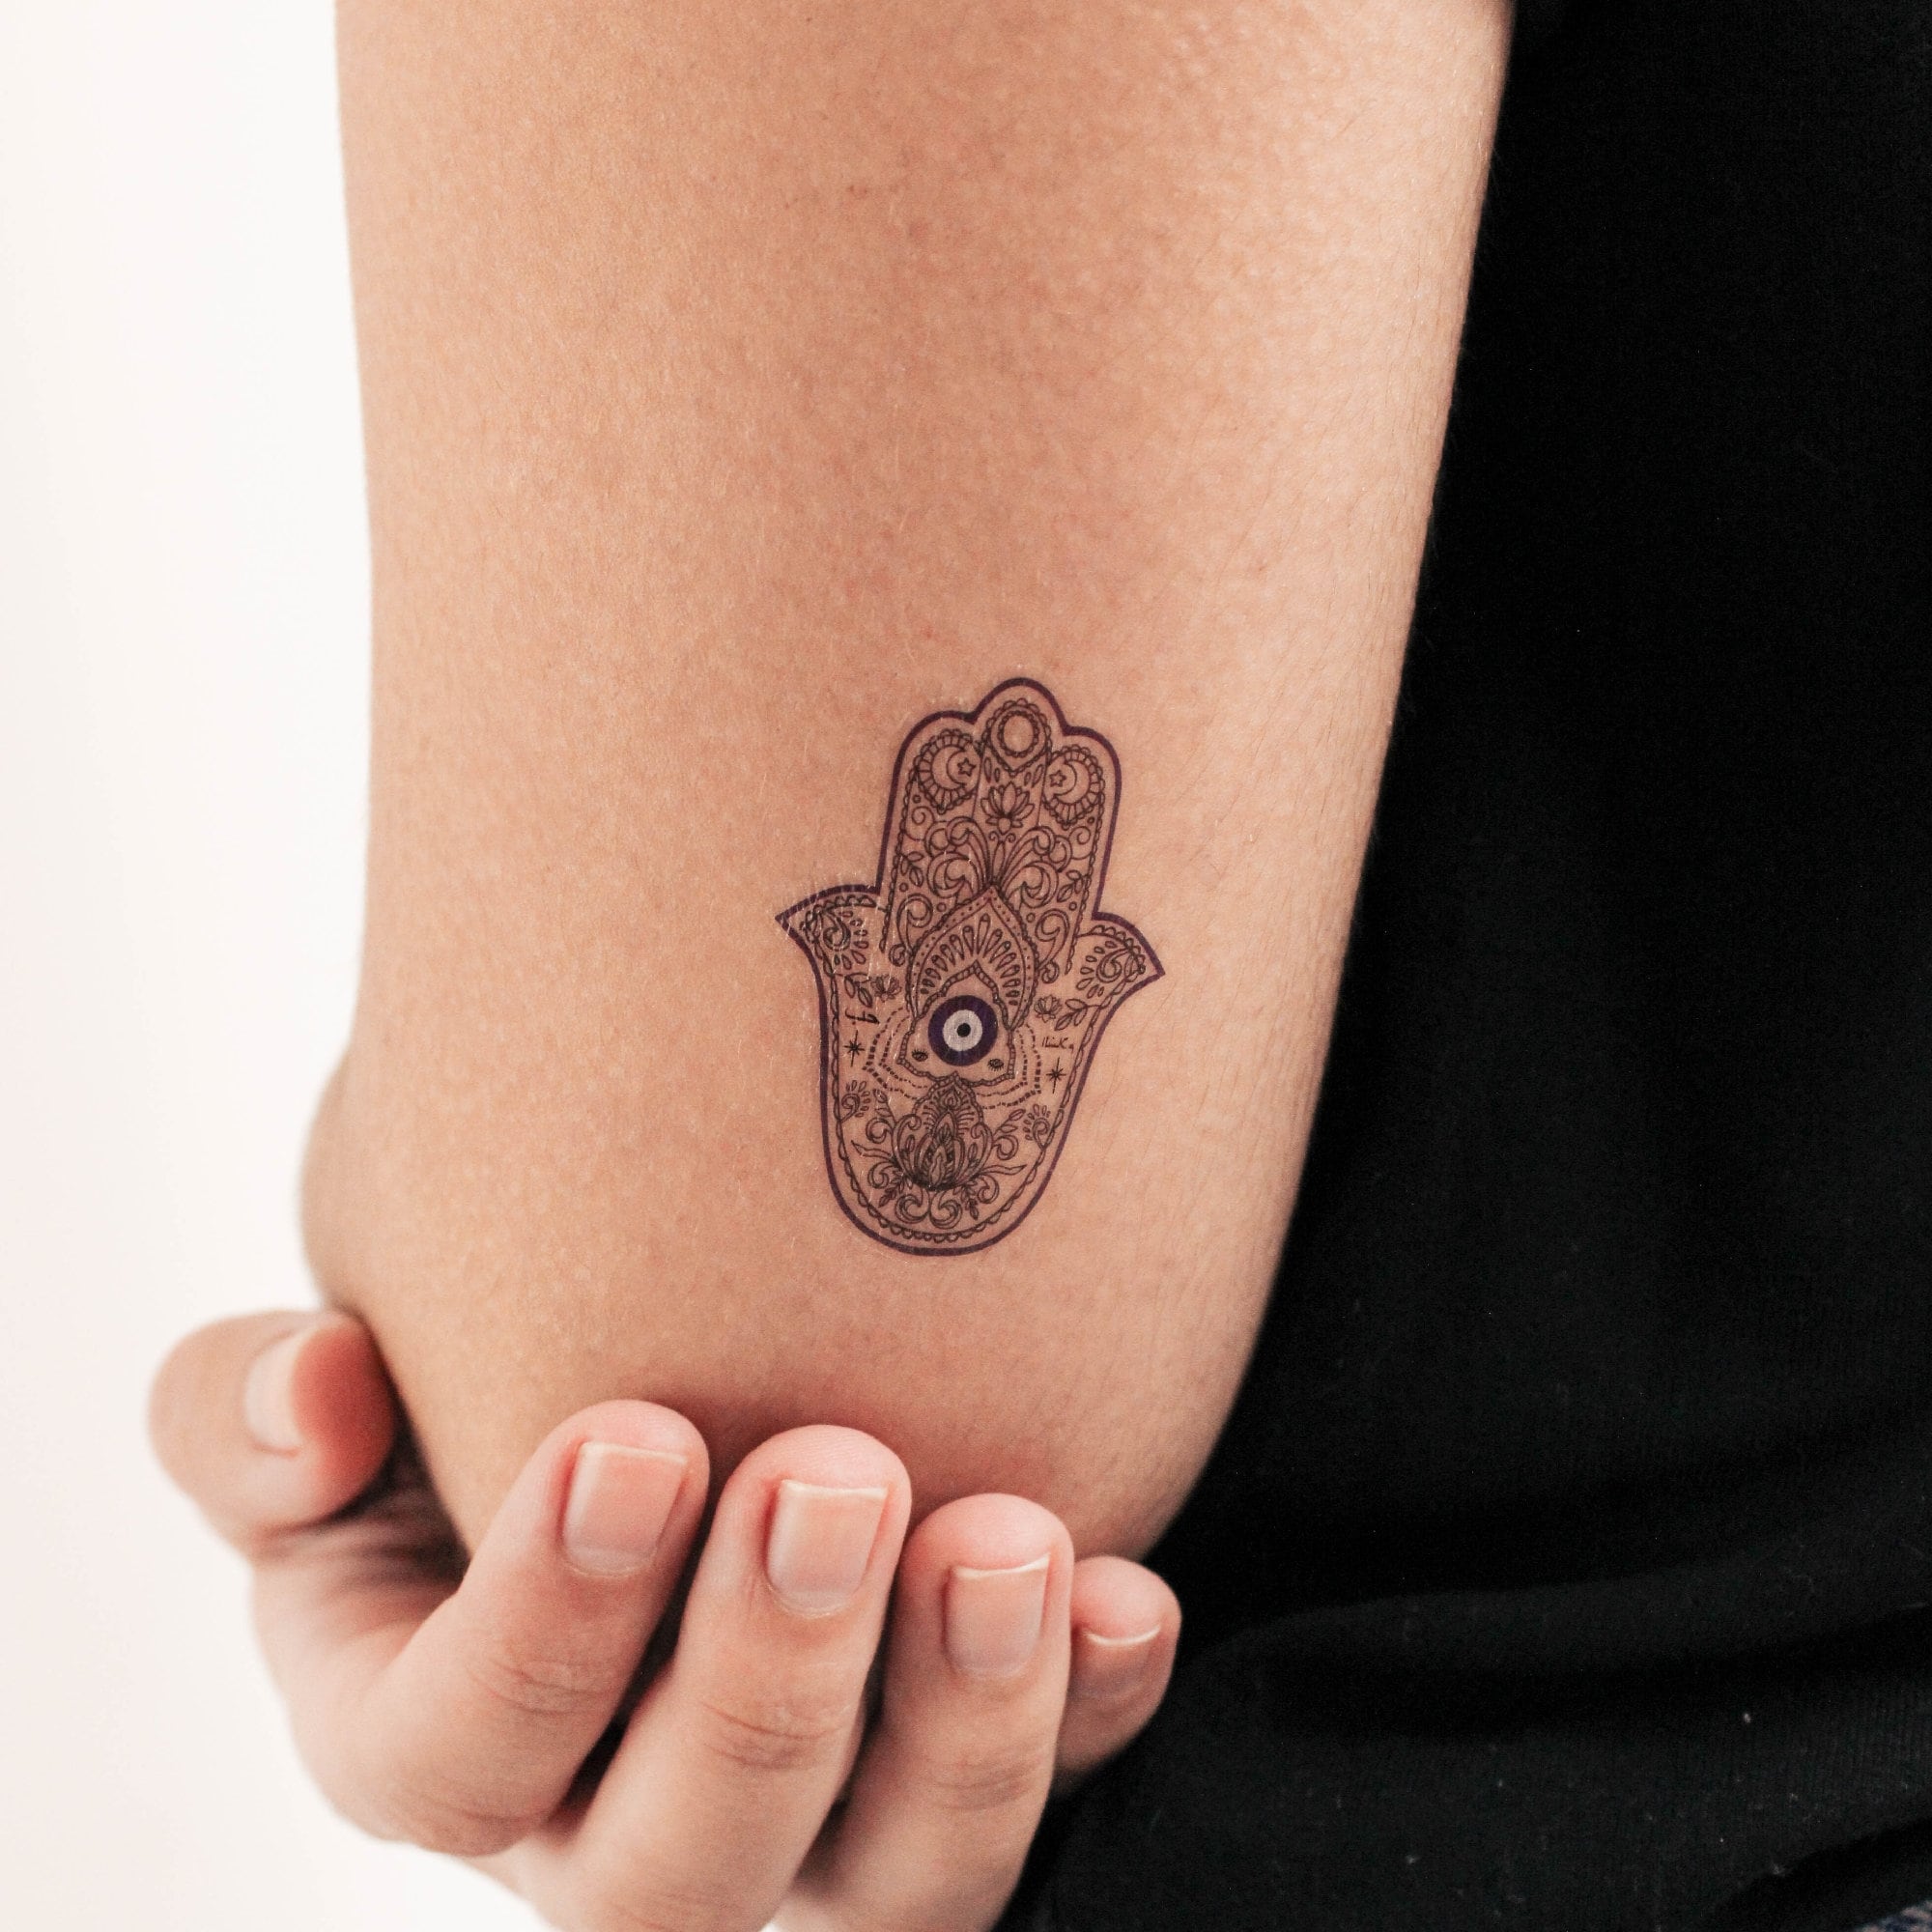 Tattoos, Hamsa Tattoos, and Tattoo Ideas image inspiration on  Designspiration